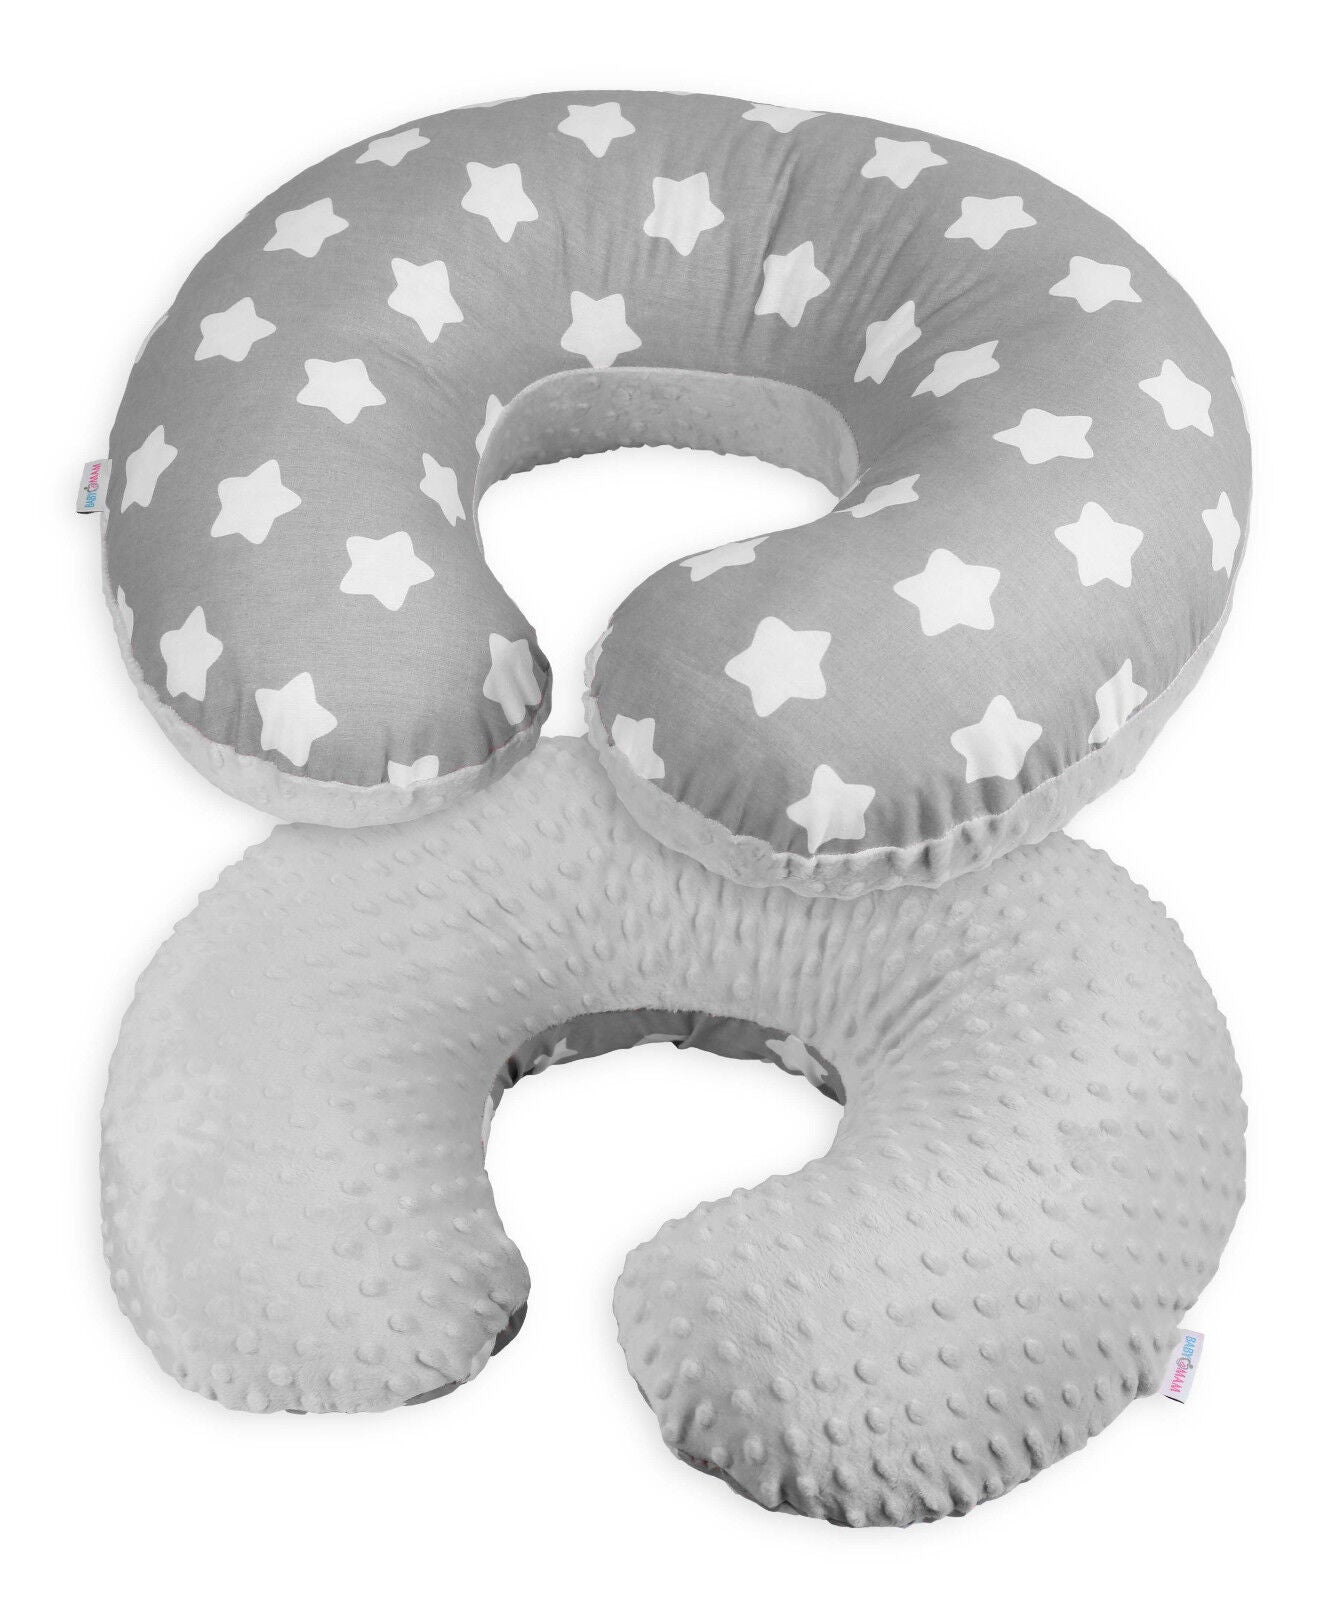 Baby Feeding Pillow Dimple Nursing Breastfeeding Pregnancy Pillow+Cover Grey/ Big white stars on grey